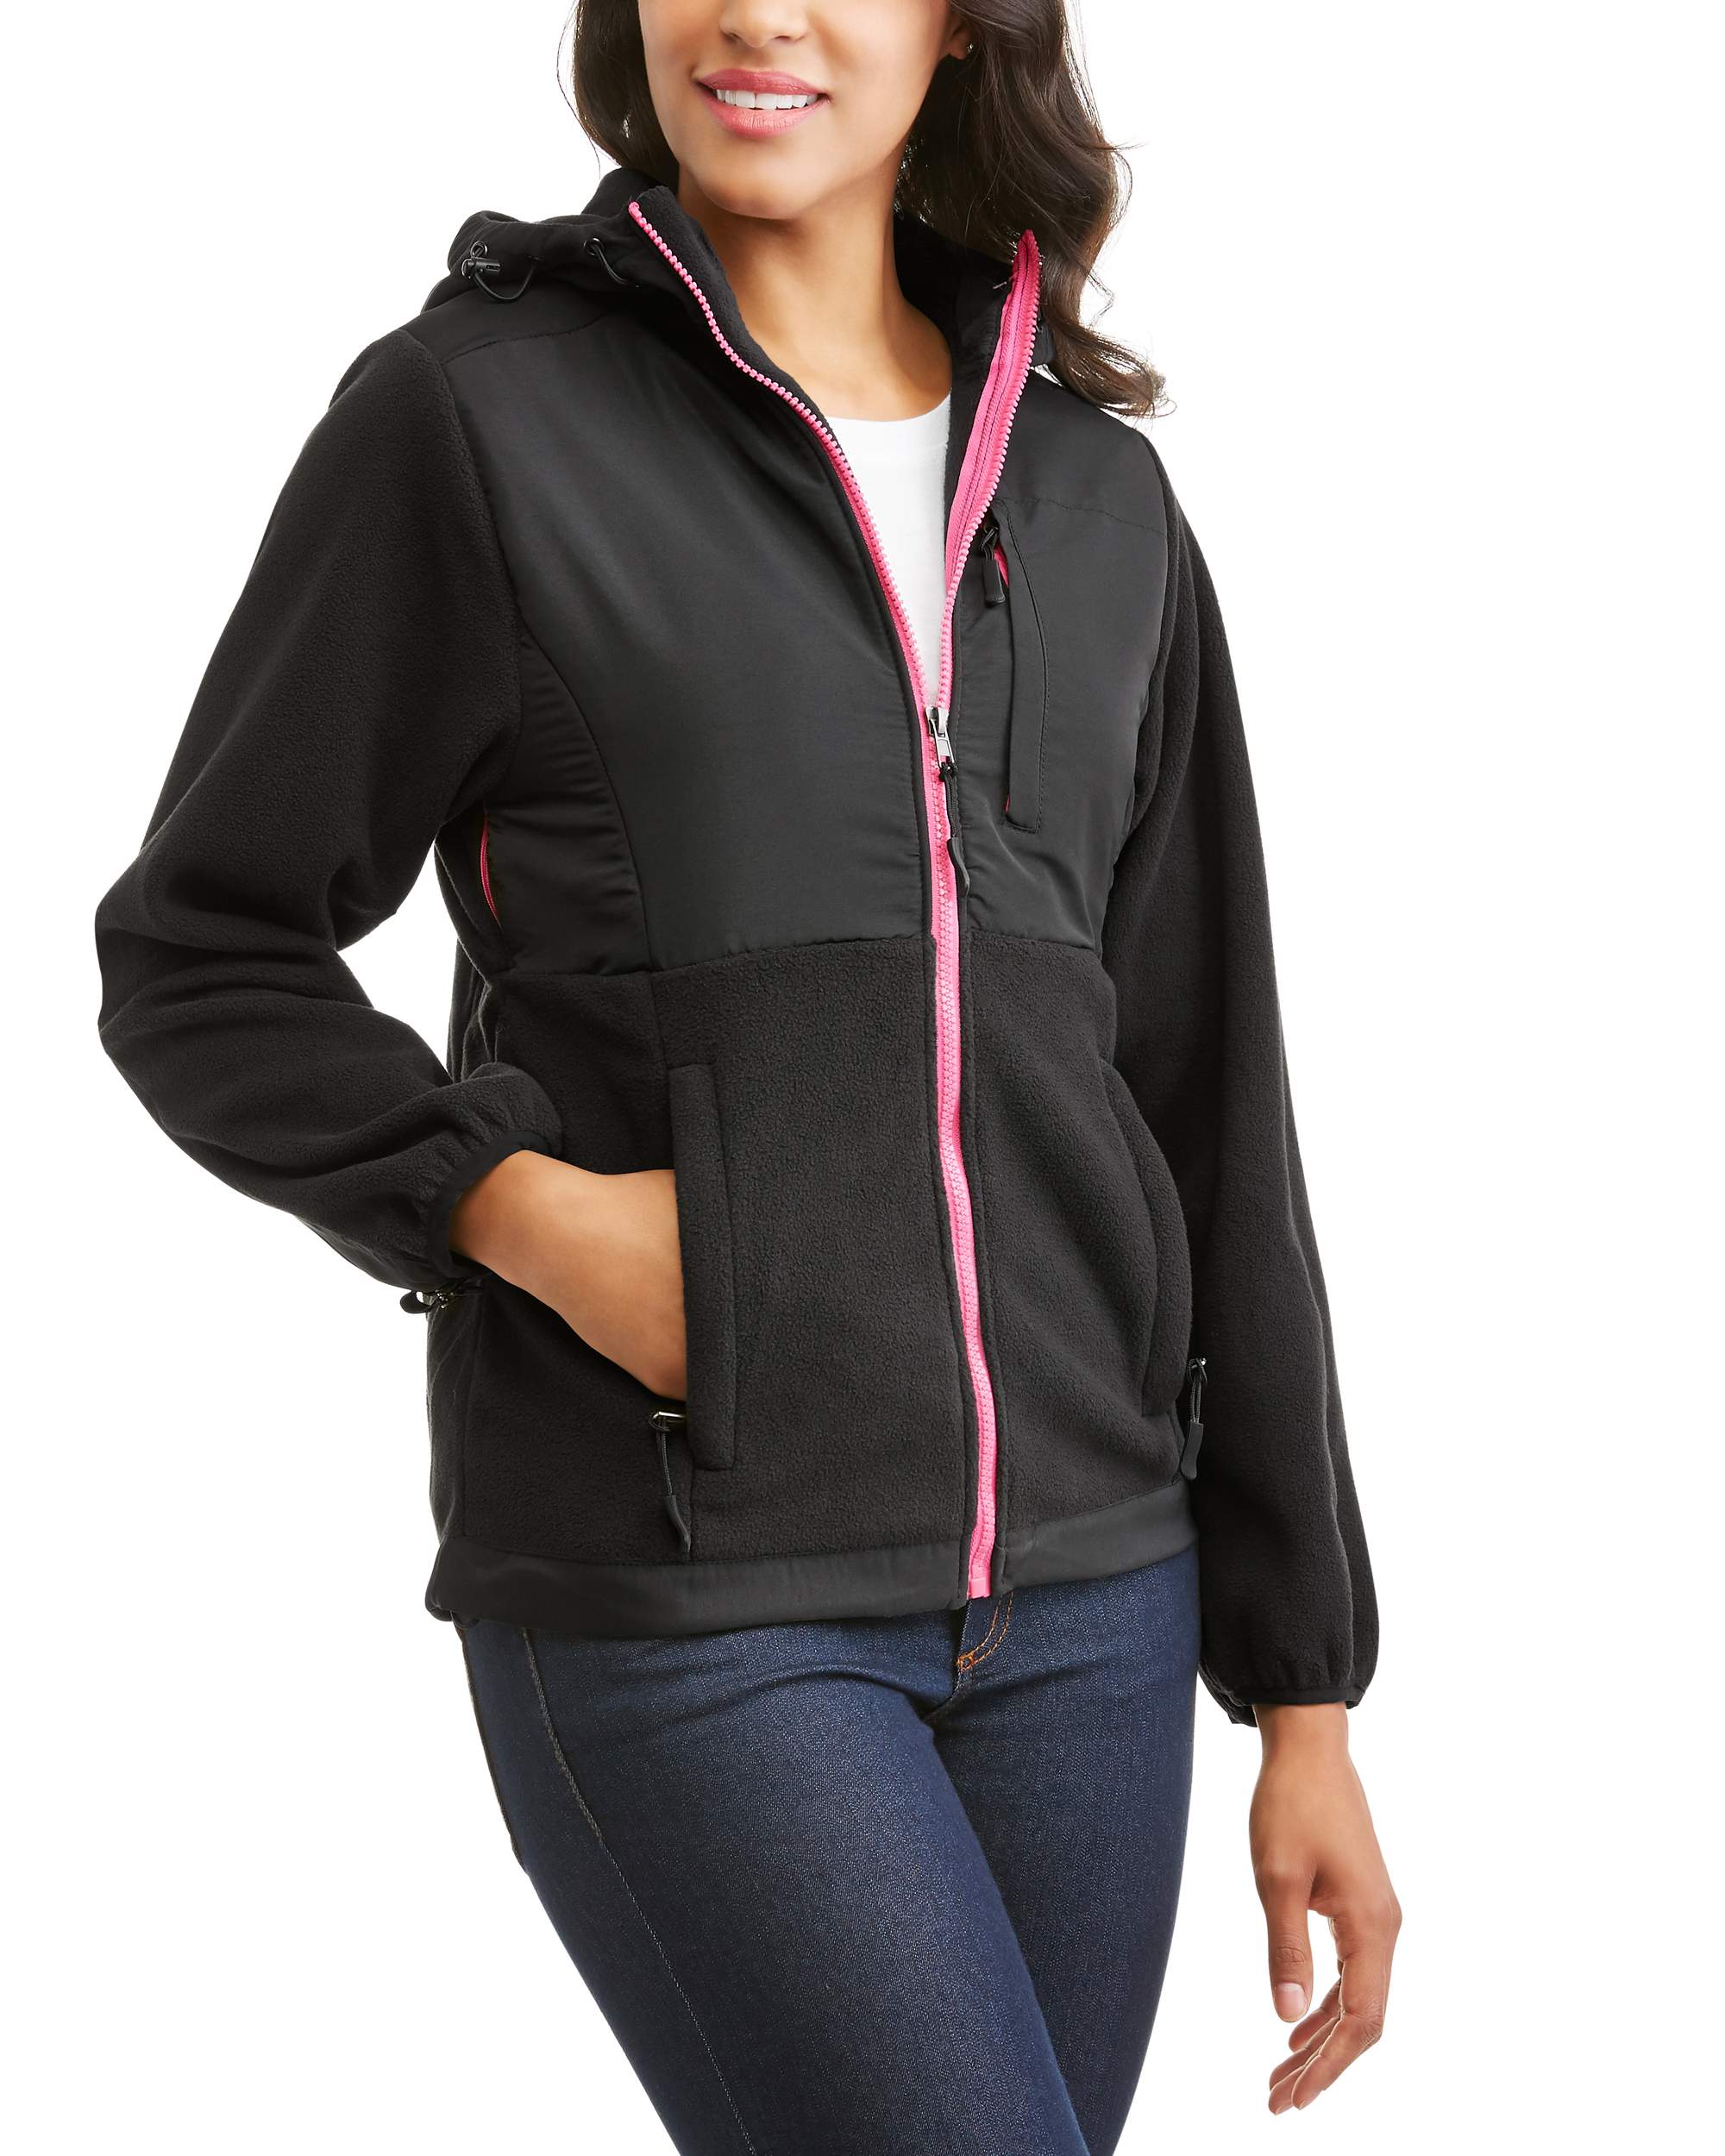 Price drop! Women’s hooded Arctic fleece shell jacket for $2.50